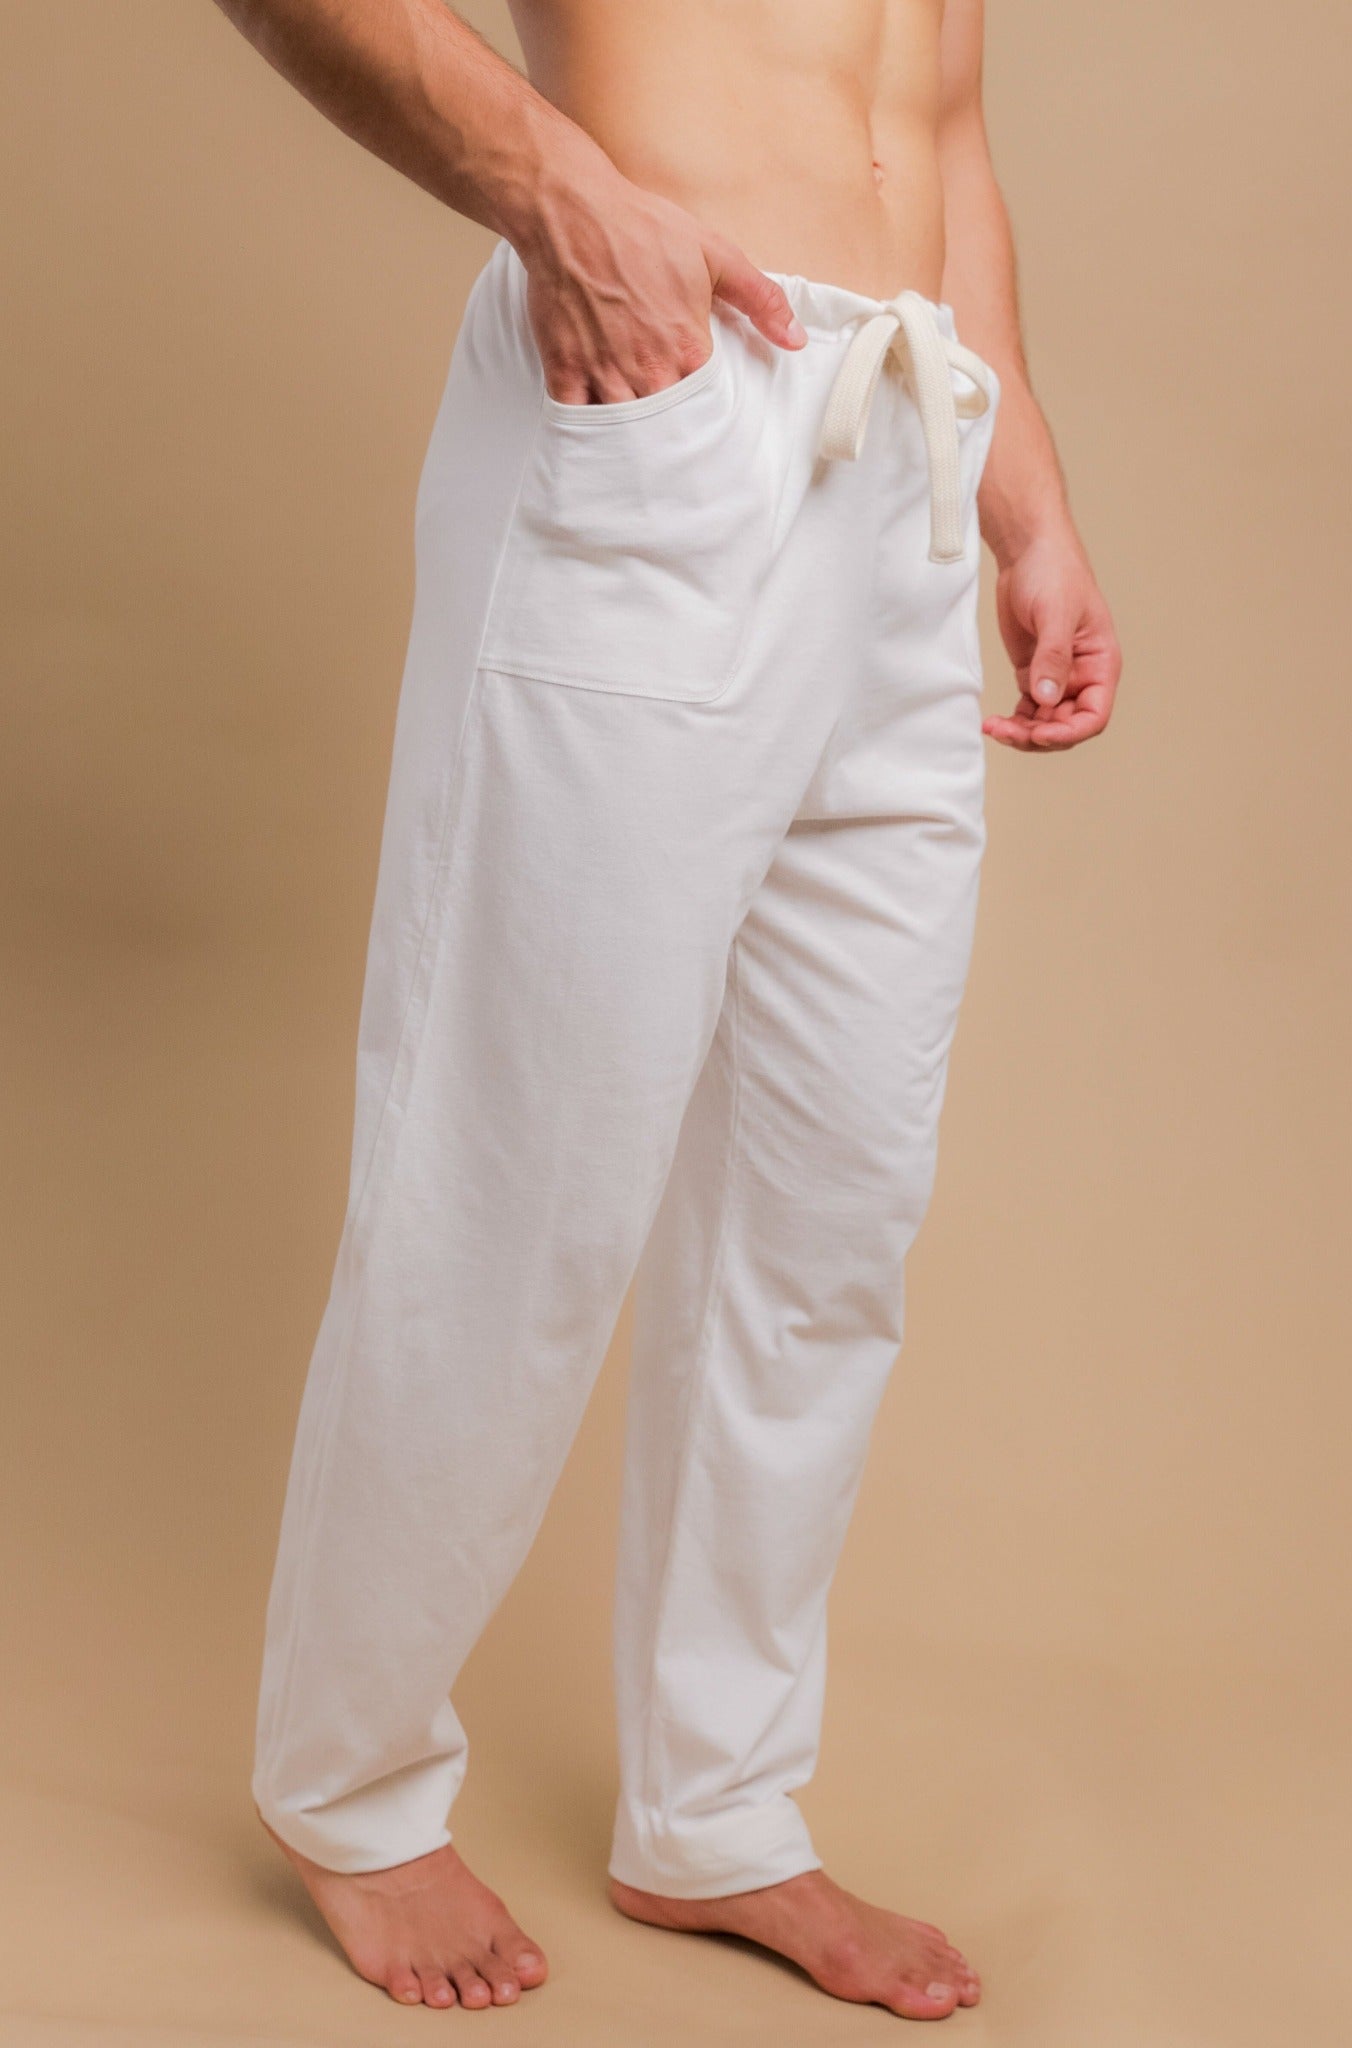 Rejlun Mens Lounge Pant Straight Leg Sleepwear Elastic Waist Pajama Pants  Baggy Pj Bottoms Lightweight Sleep Trousers White M